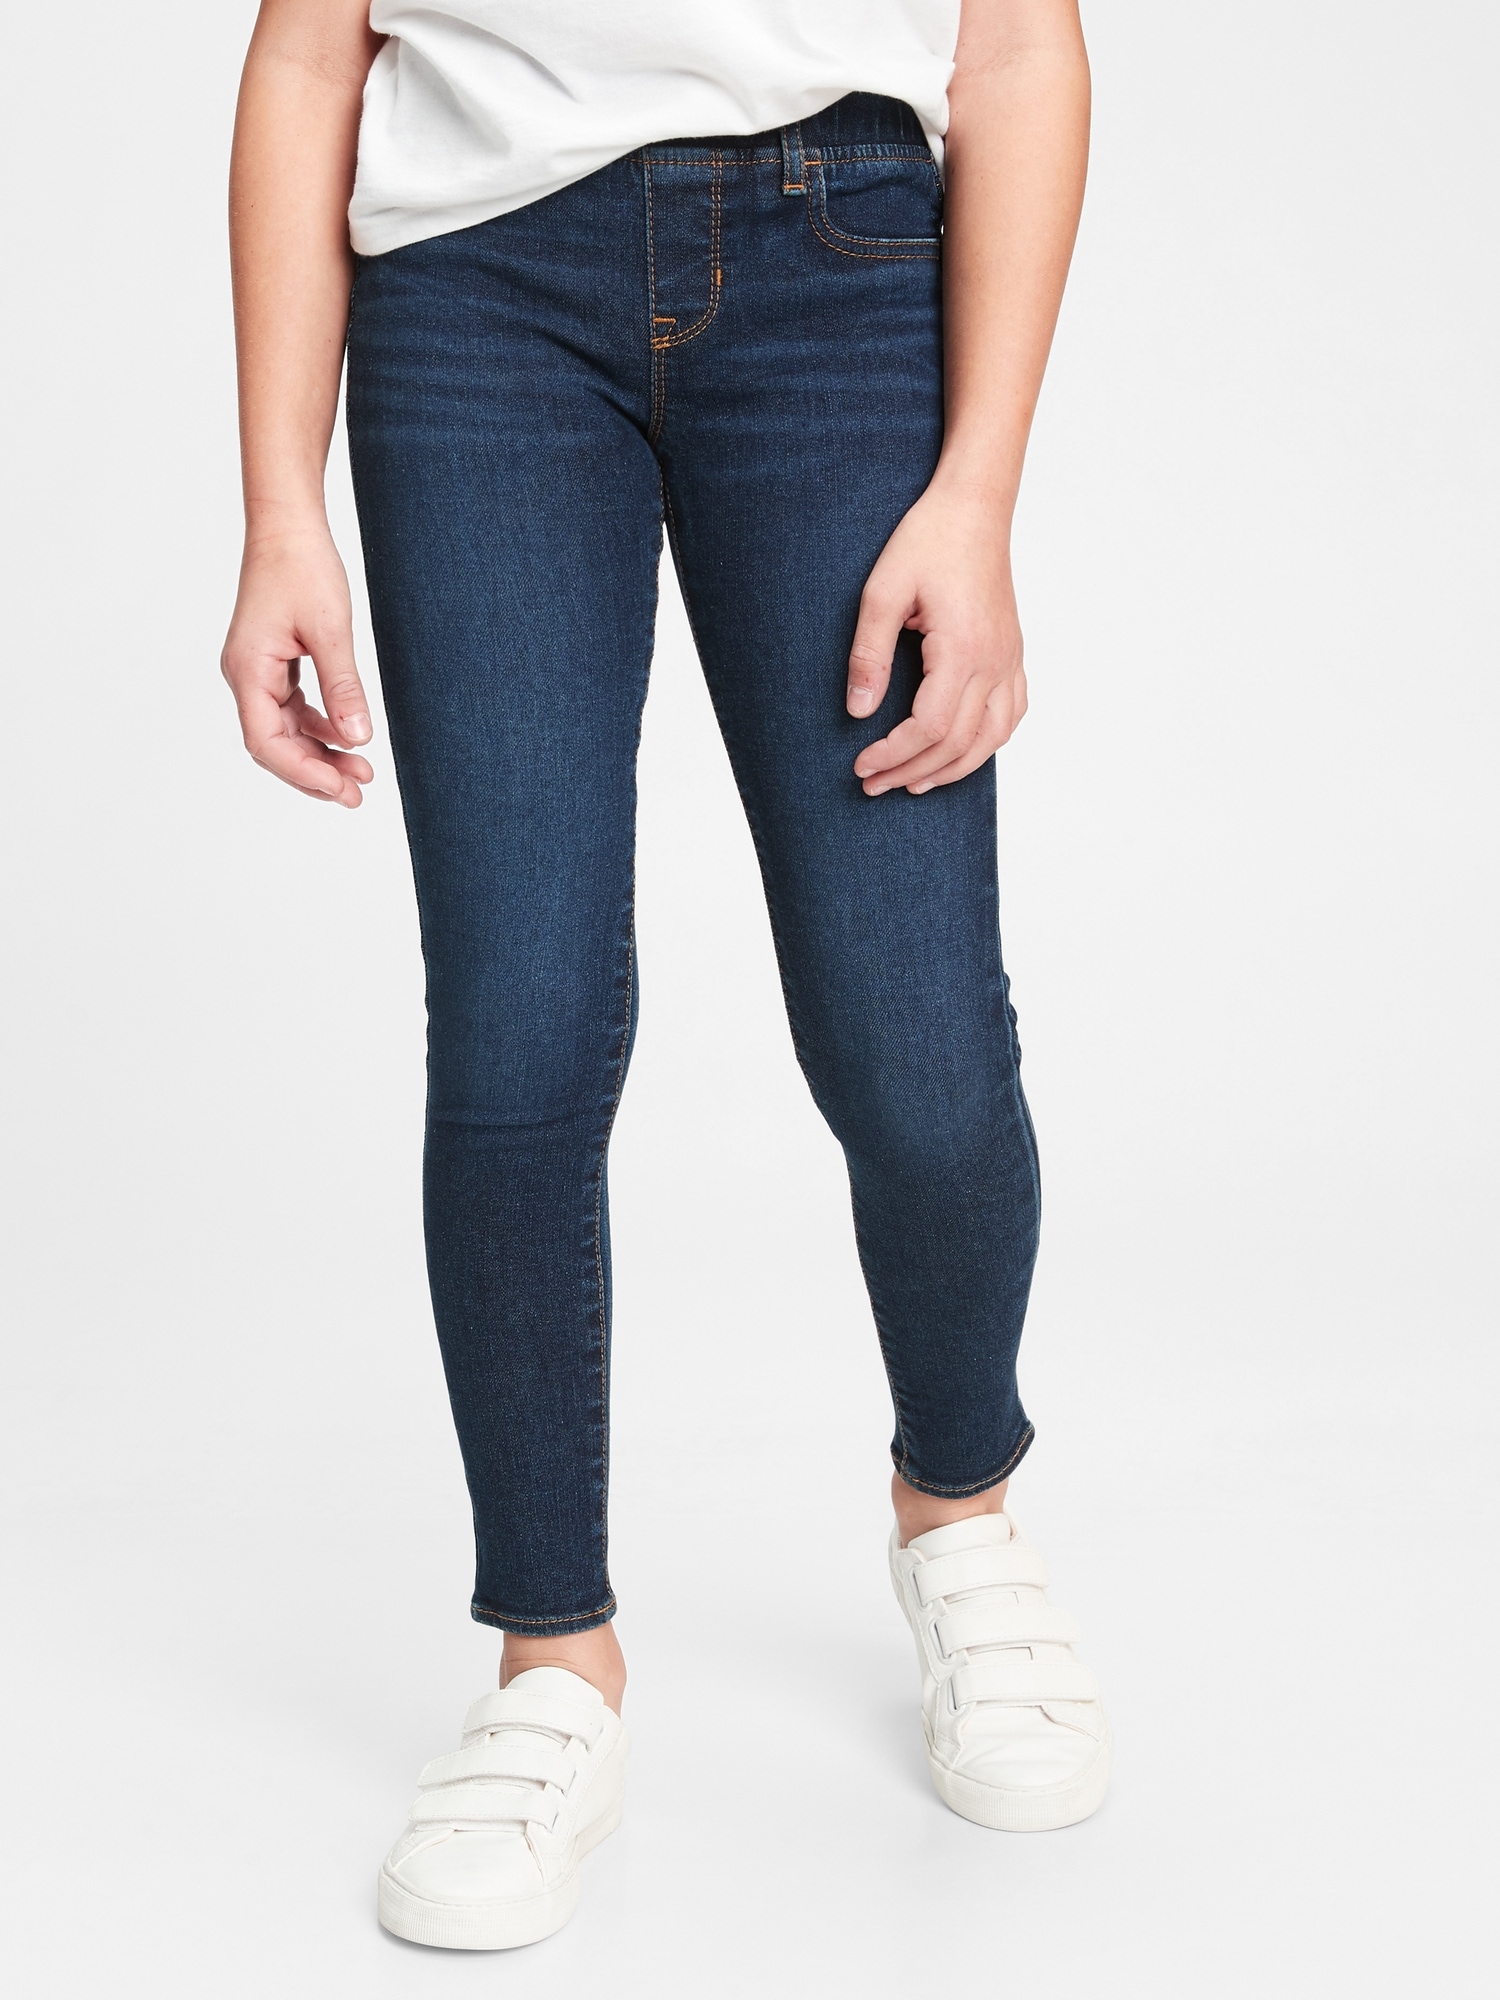 GAP Womens Mid Rise Favorite Jegging Jeans, Dark Indigo, 24 Short